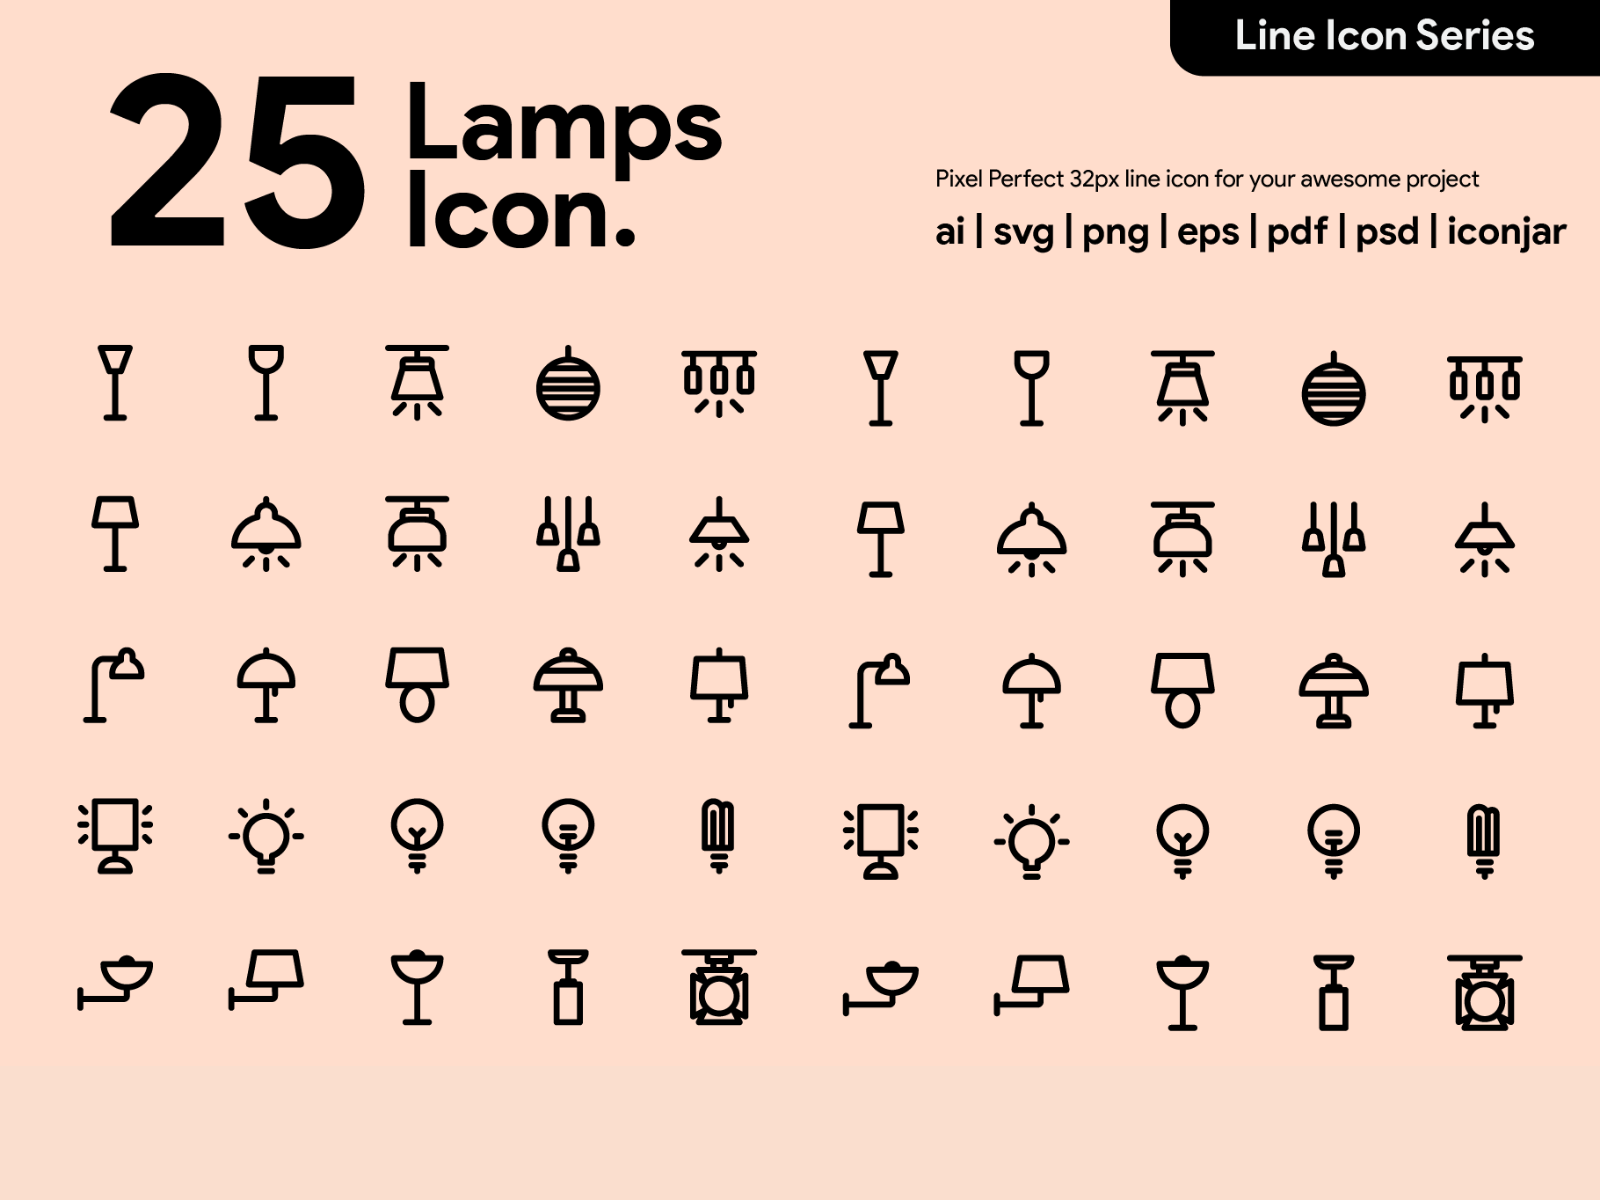 App icons design idea #305: Kawaicon - 25 Lamps Line Icon